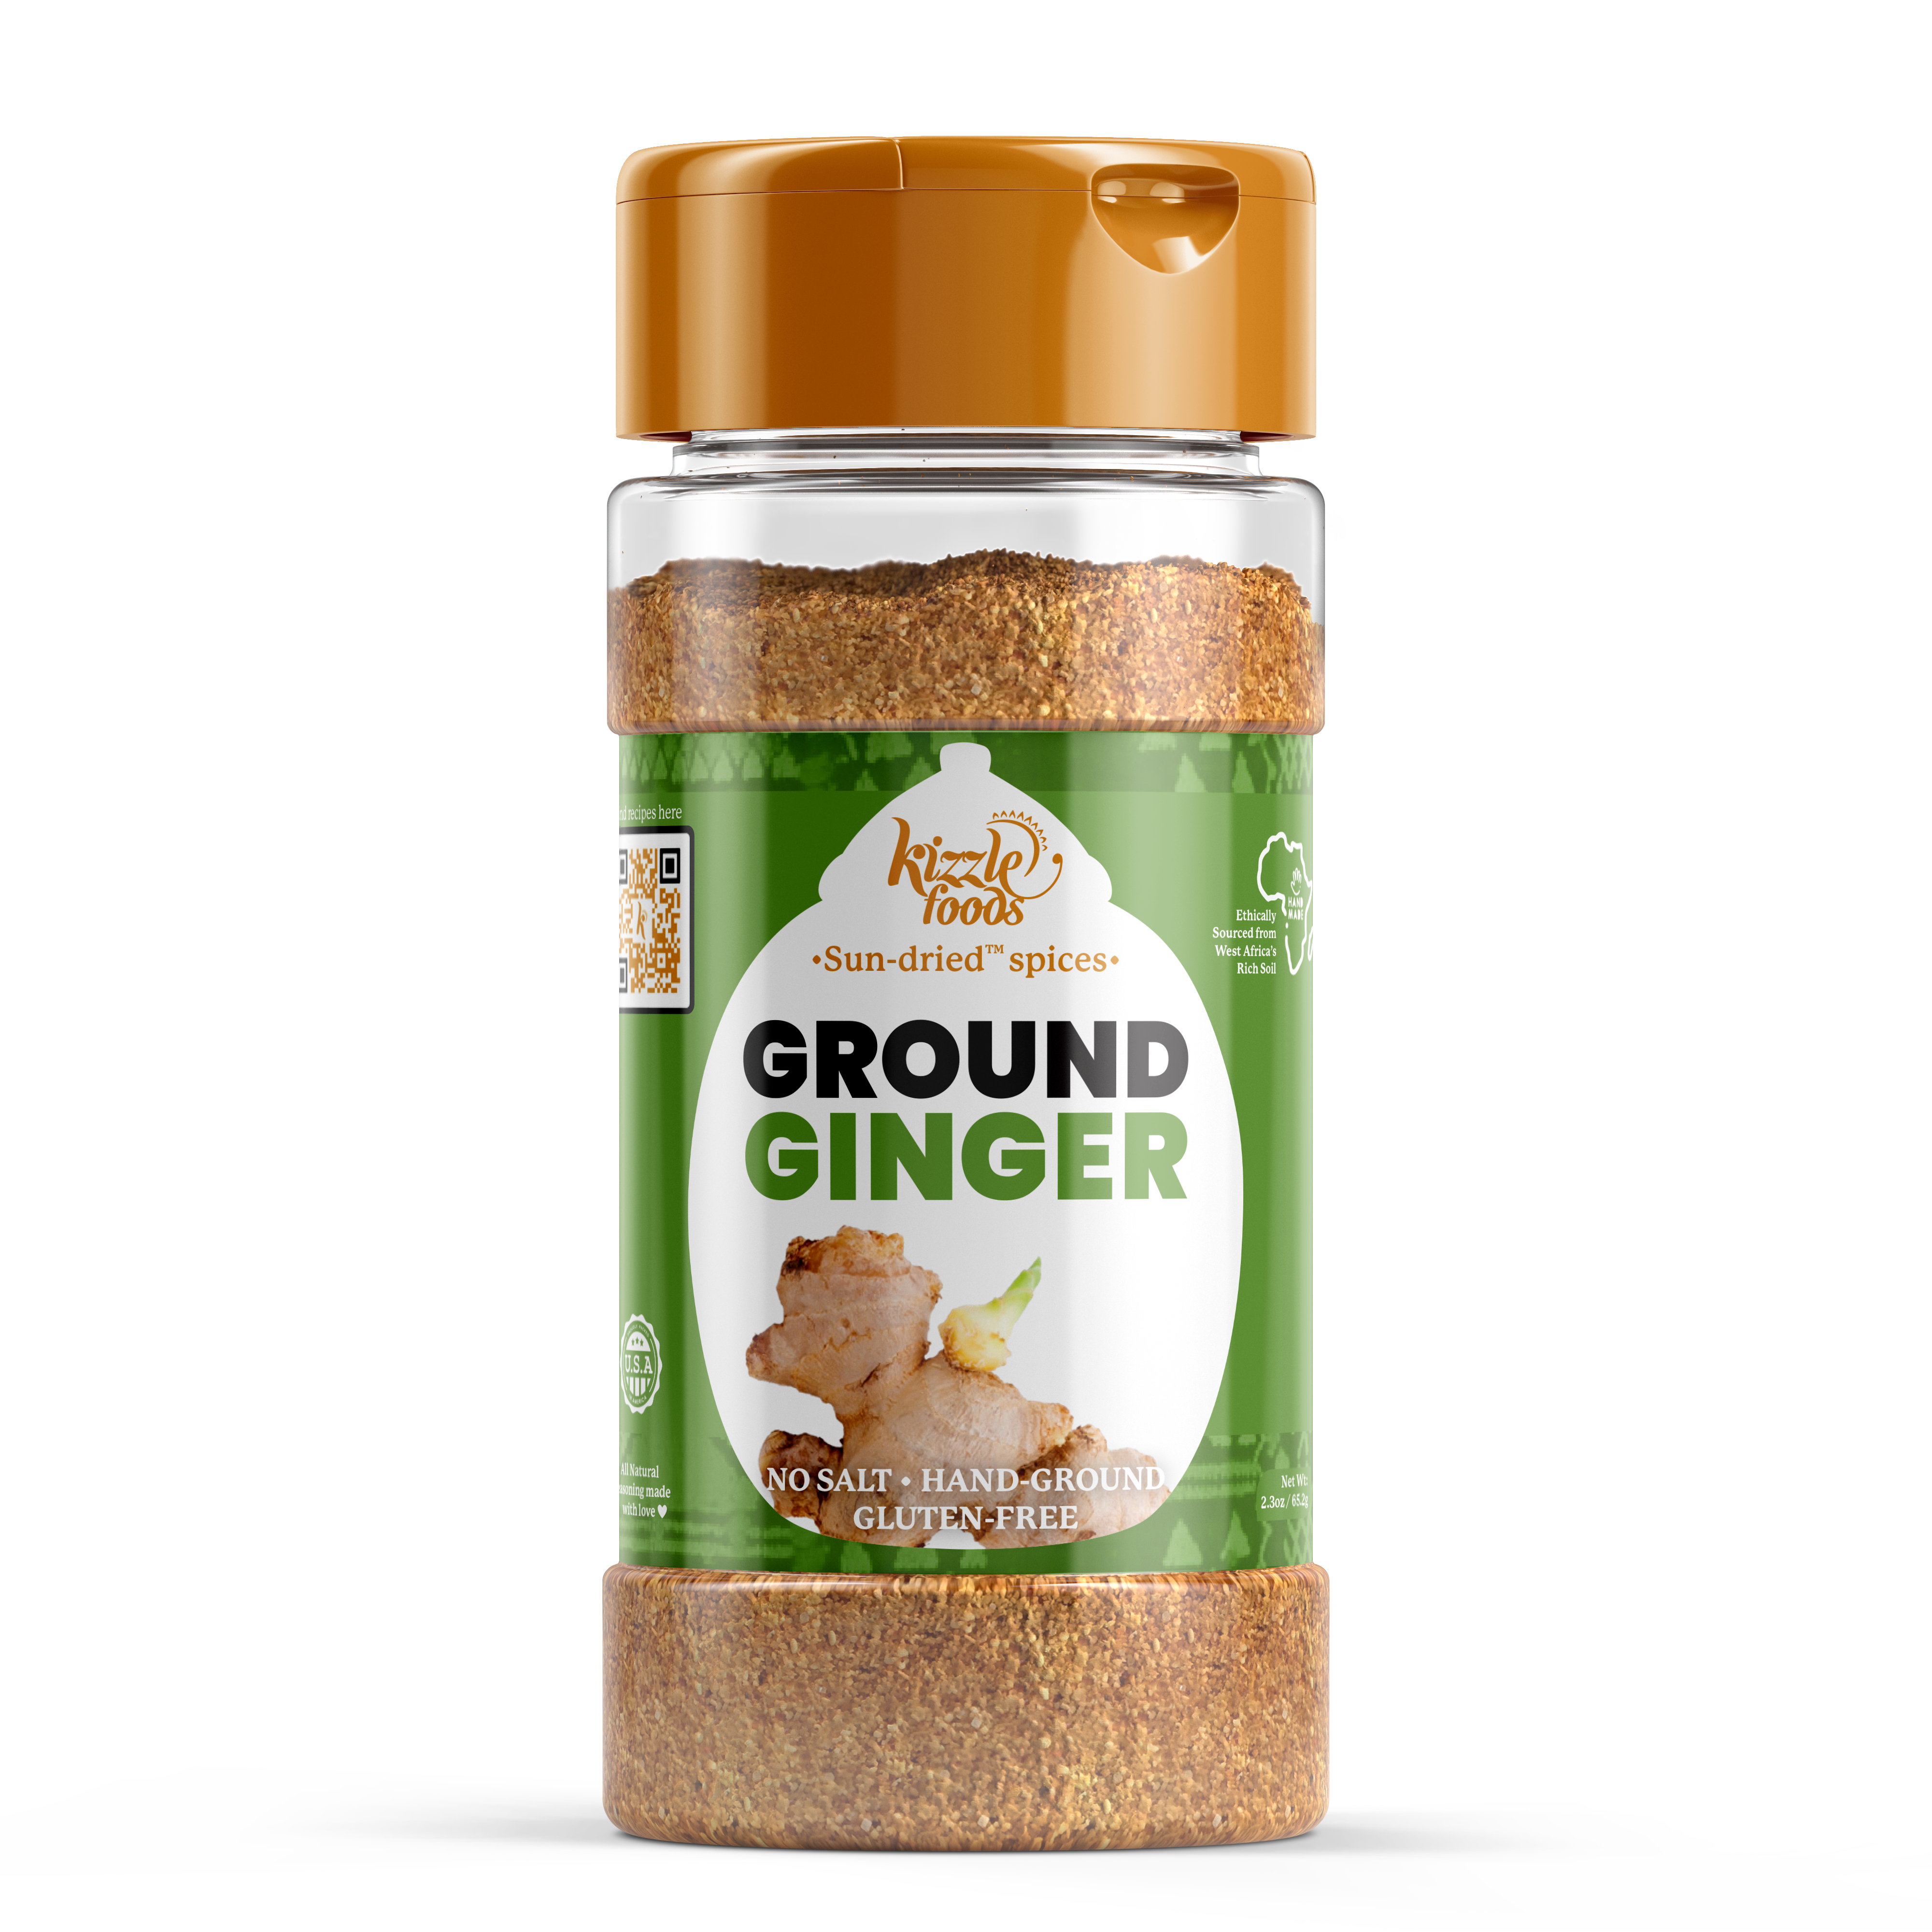 KizzleFoods Ground Ginger, 2.3 oz